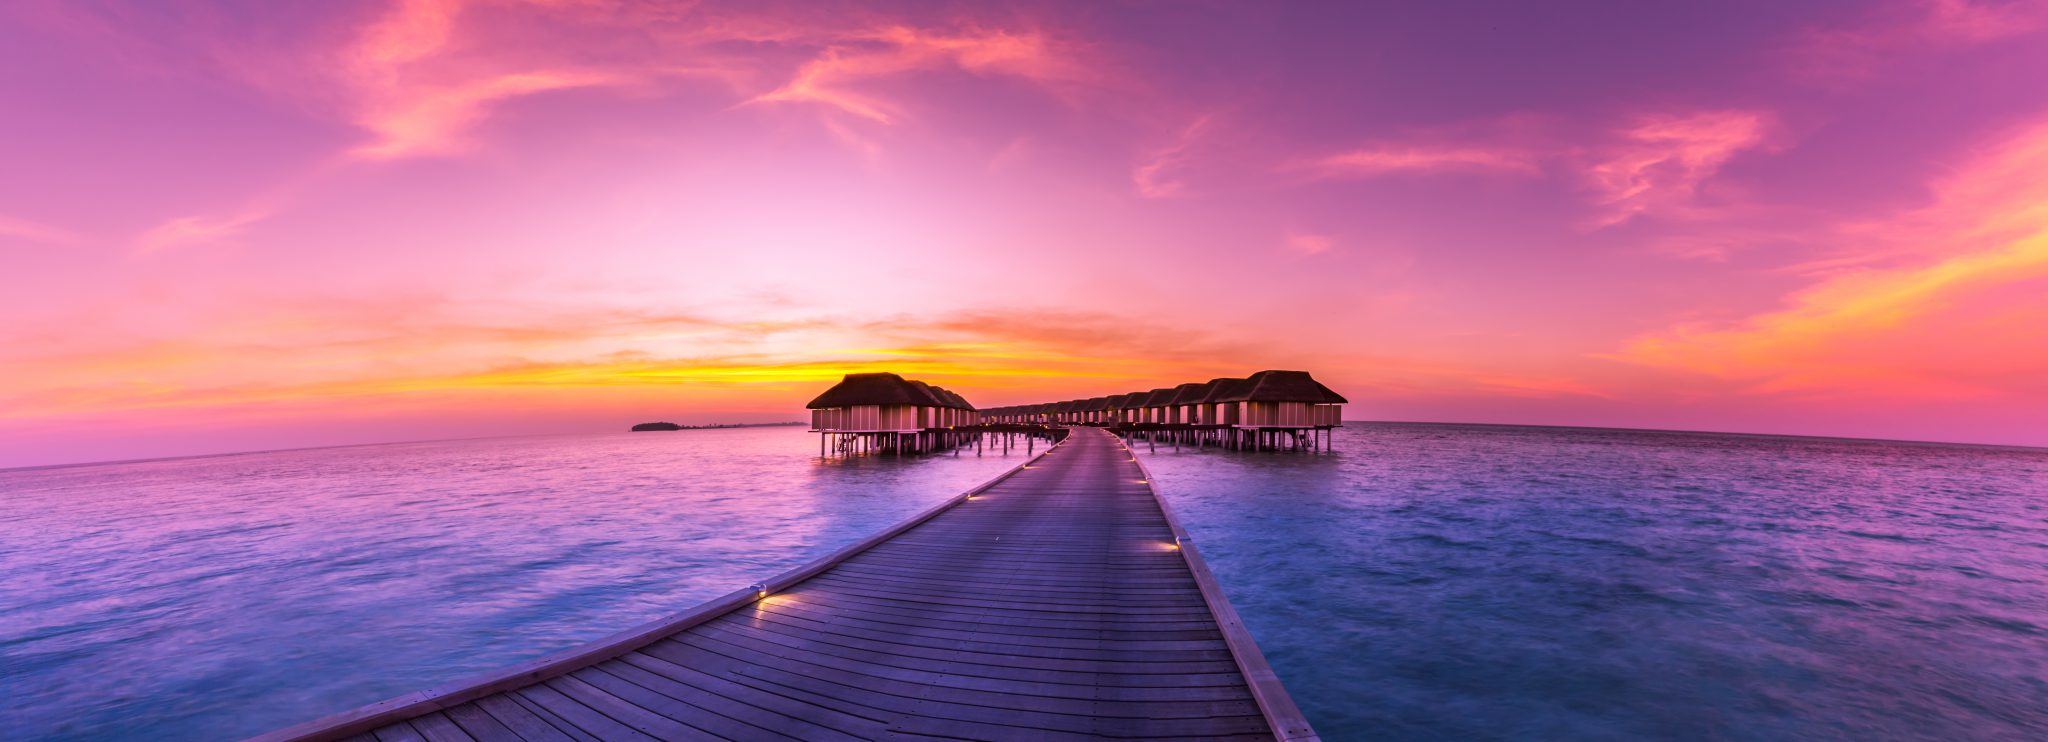 MaldivesResort_Shutterstock